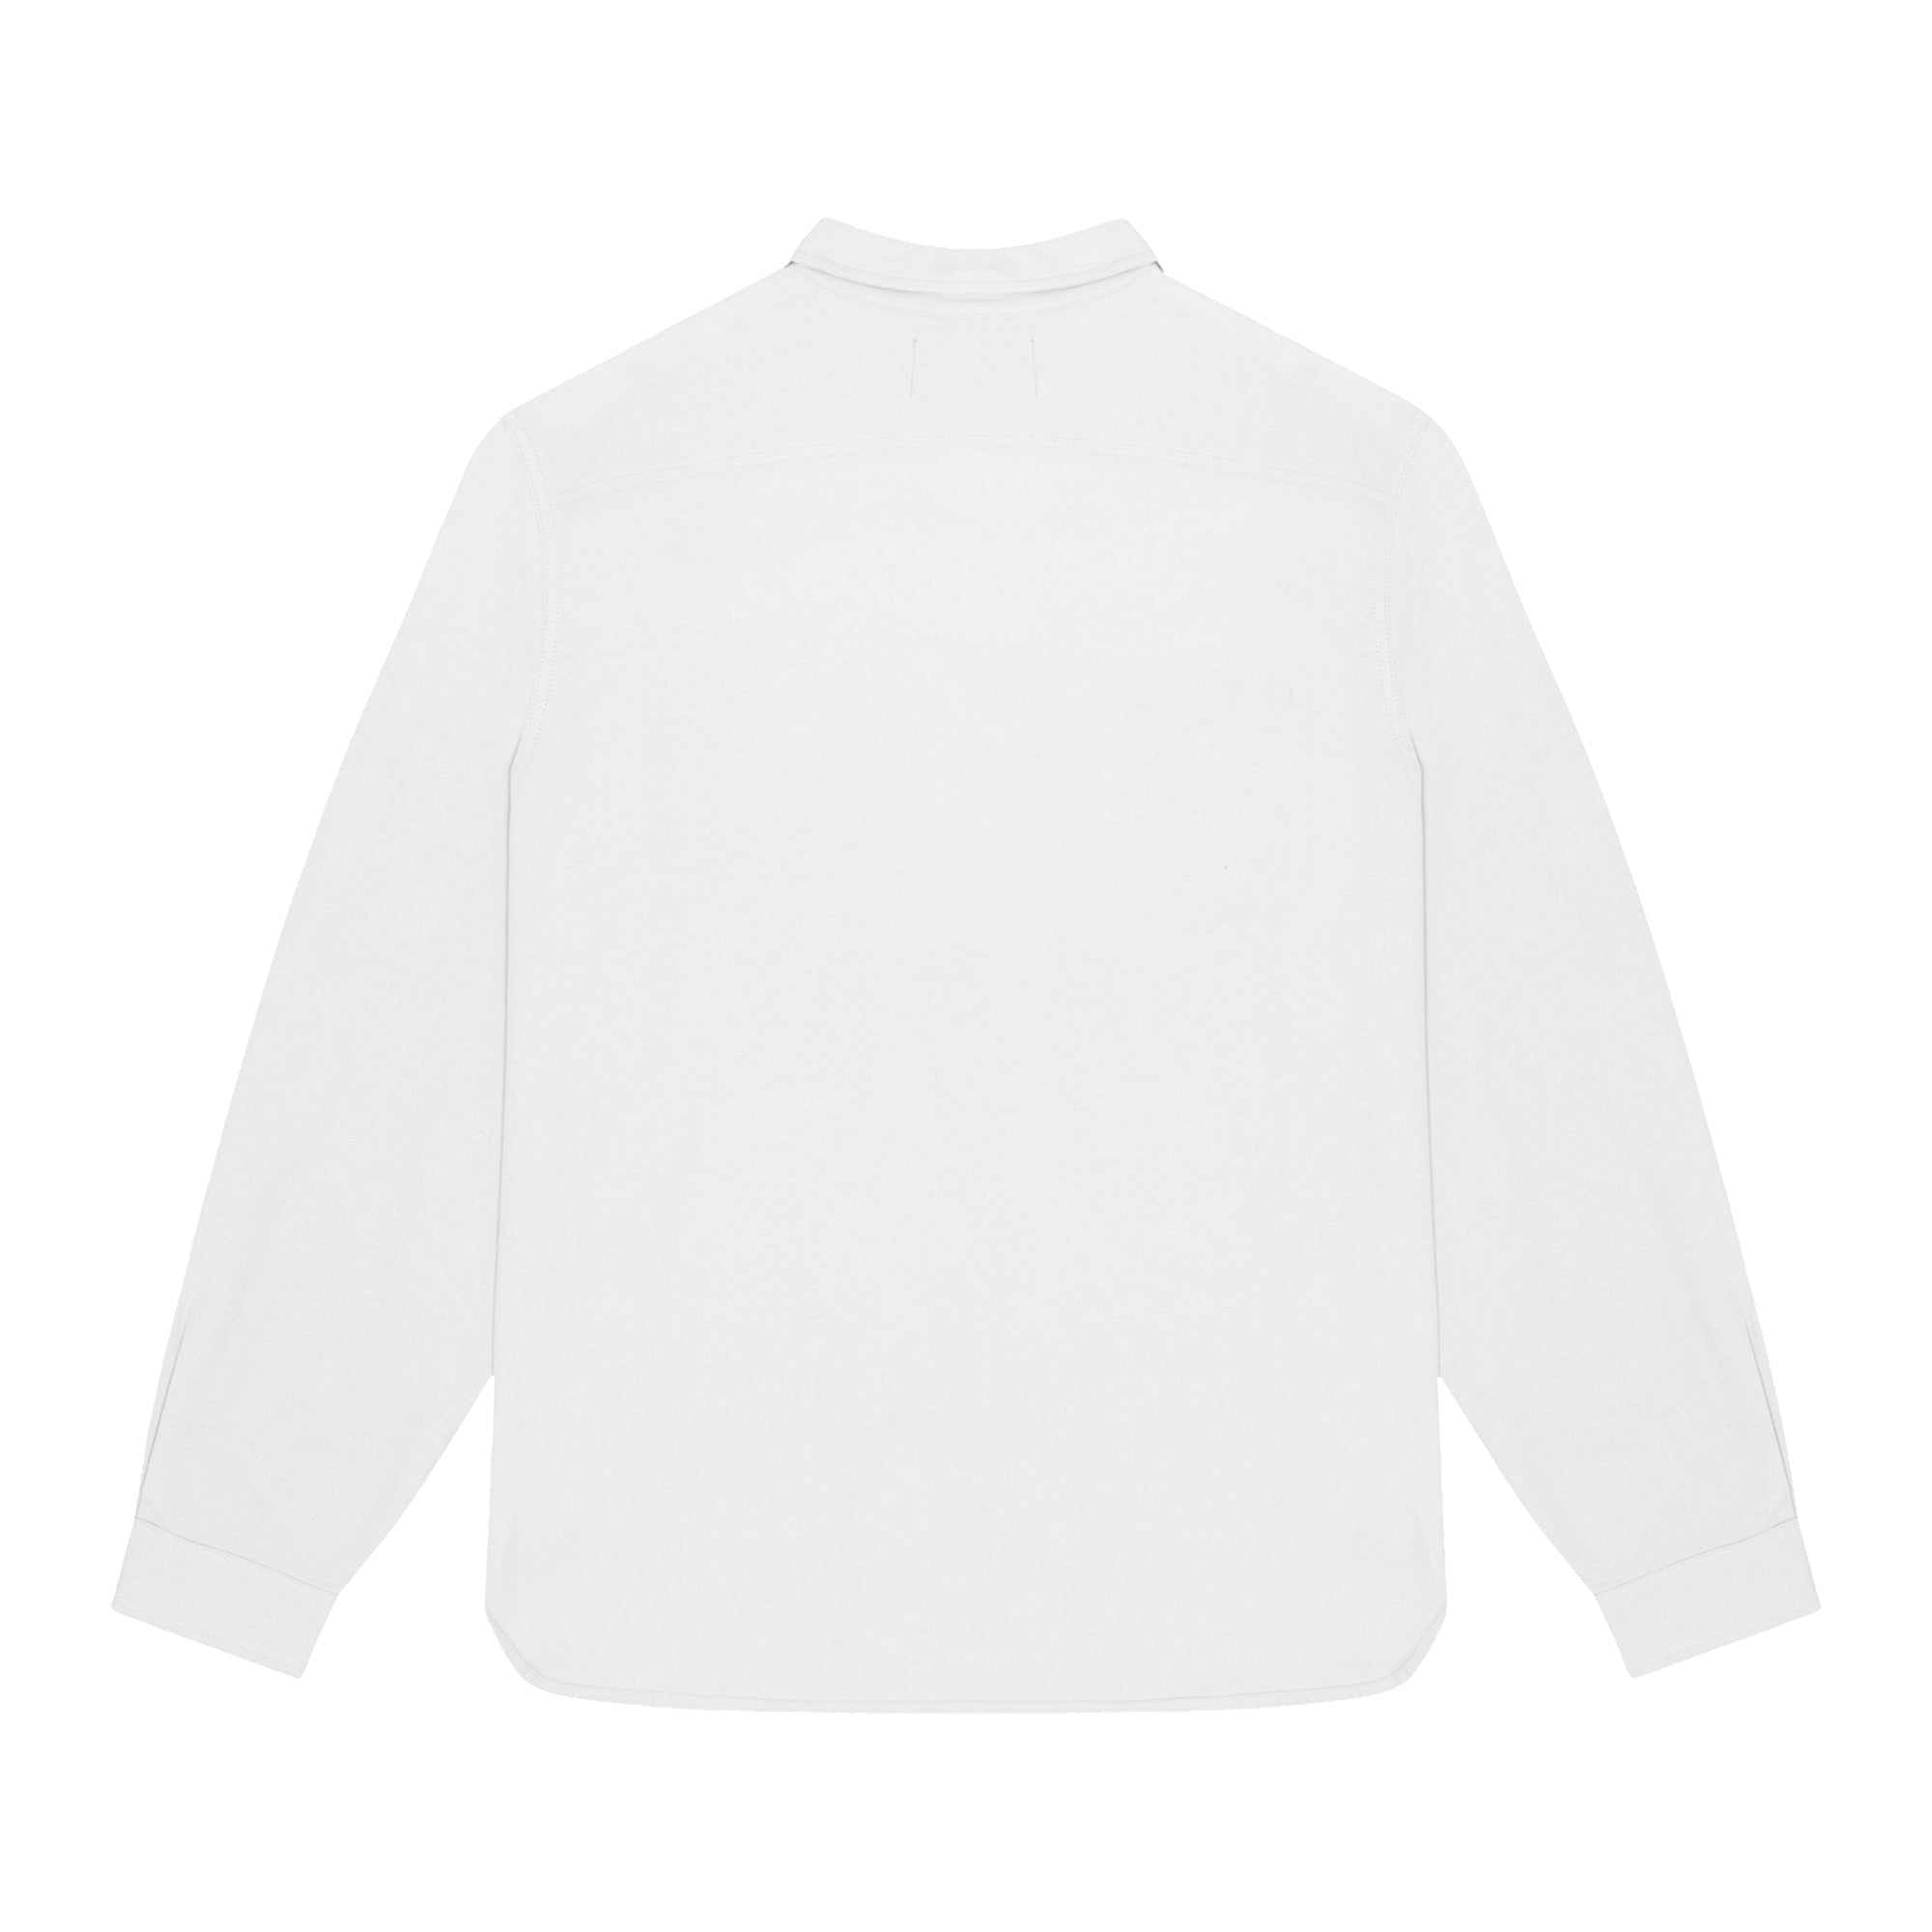 Denim Tears - Men’s Denim Sport Oxford Shirt - (White) view 2